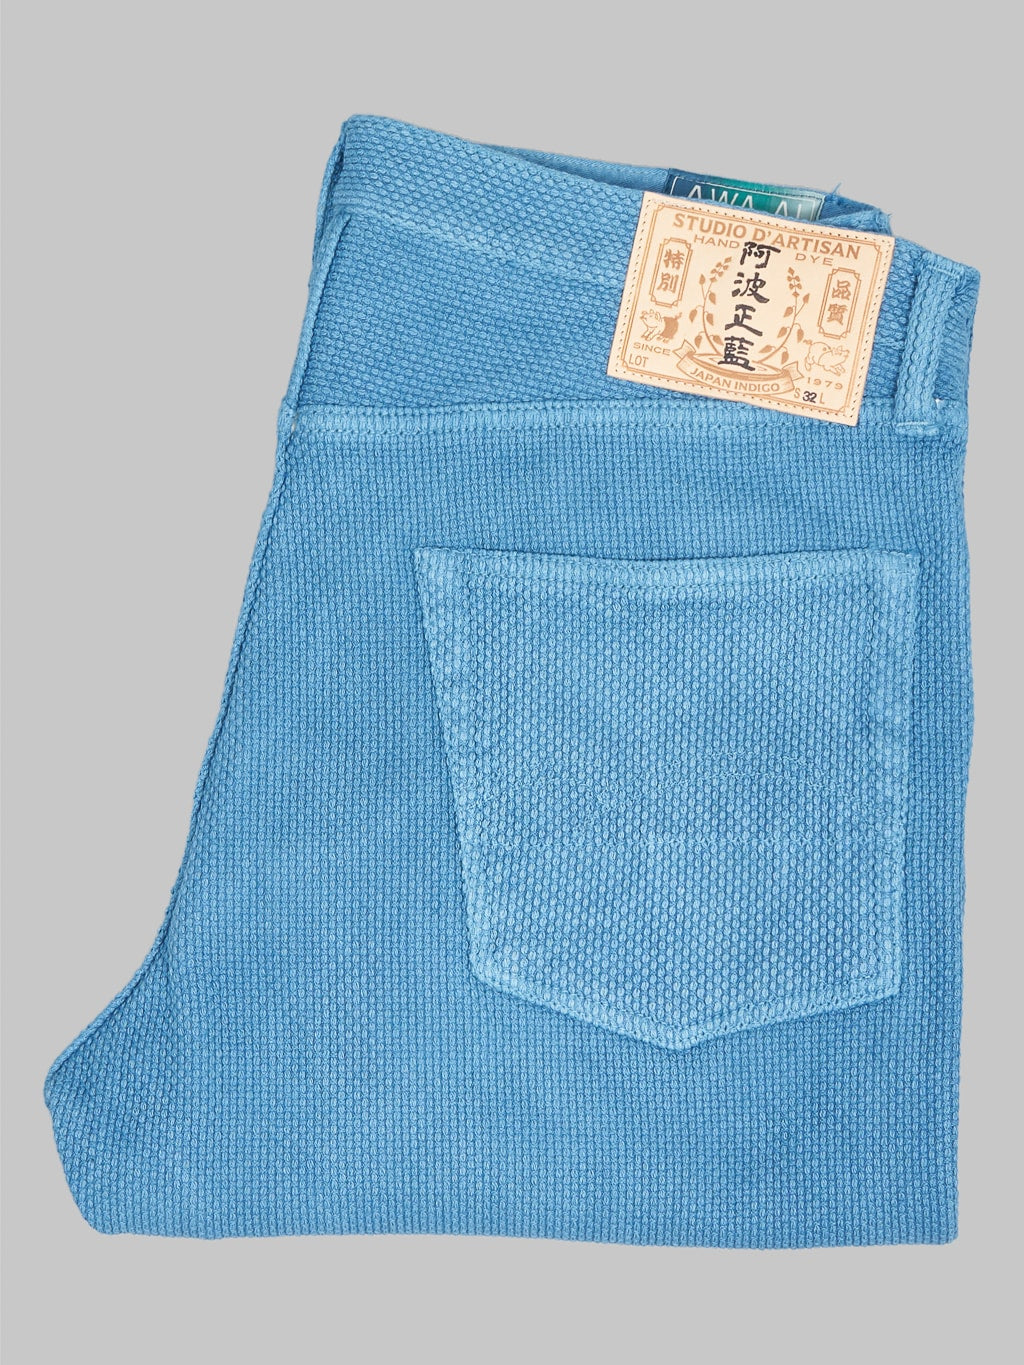 studio dartisan awa ai natural indigo sashiko pants regular tapered fabric